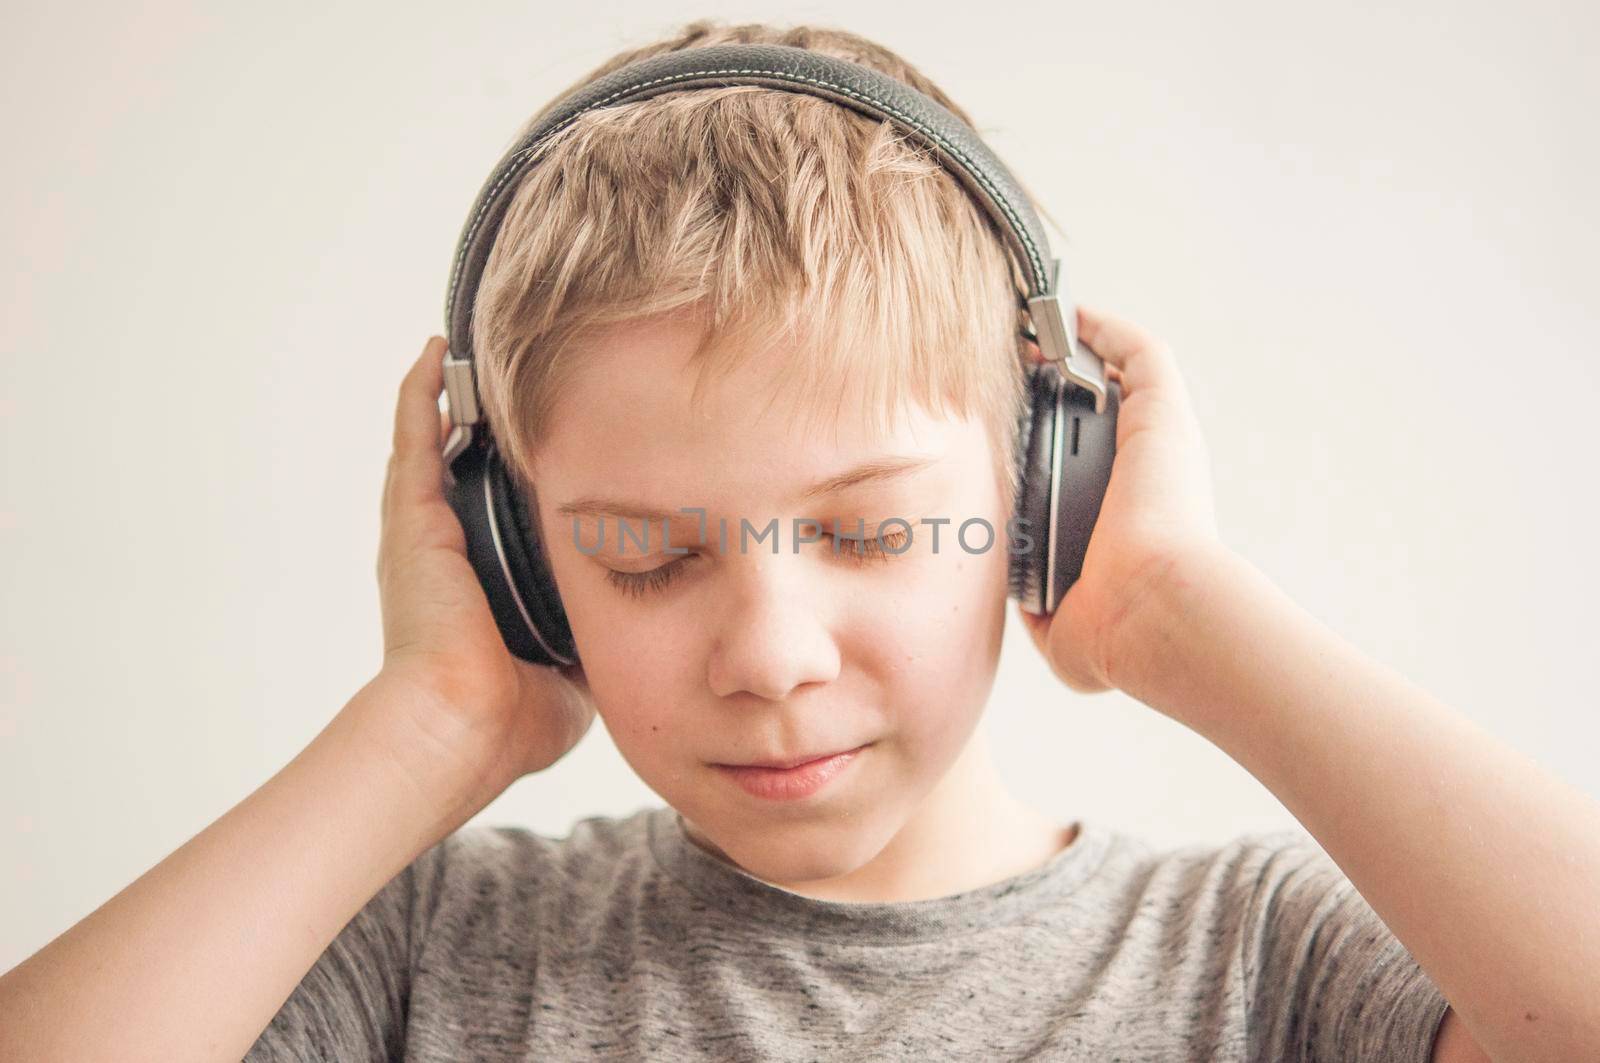 boy in headphones enjoys music, Keep your hands on the headphones by inxti